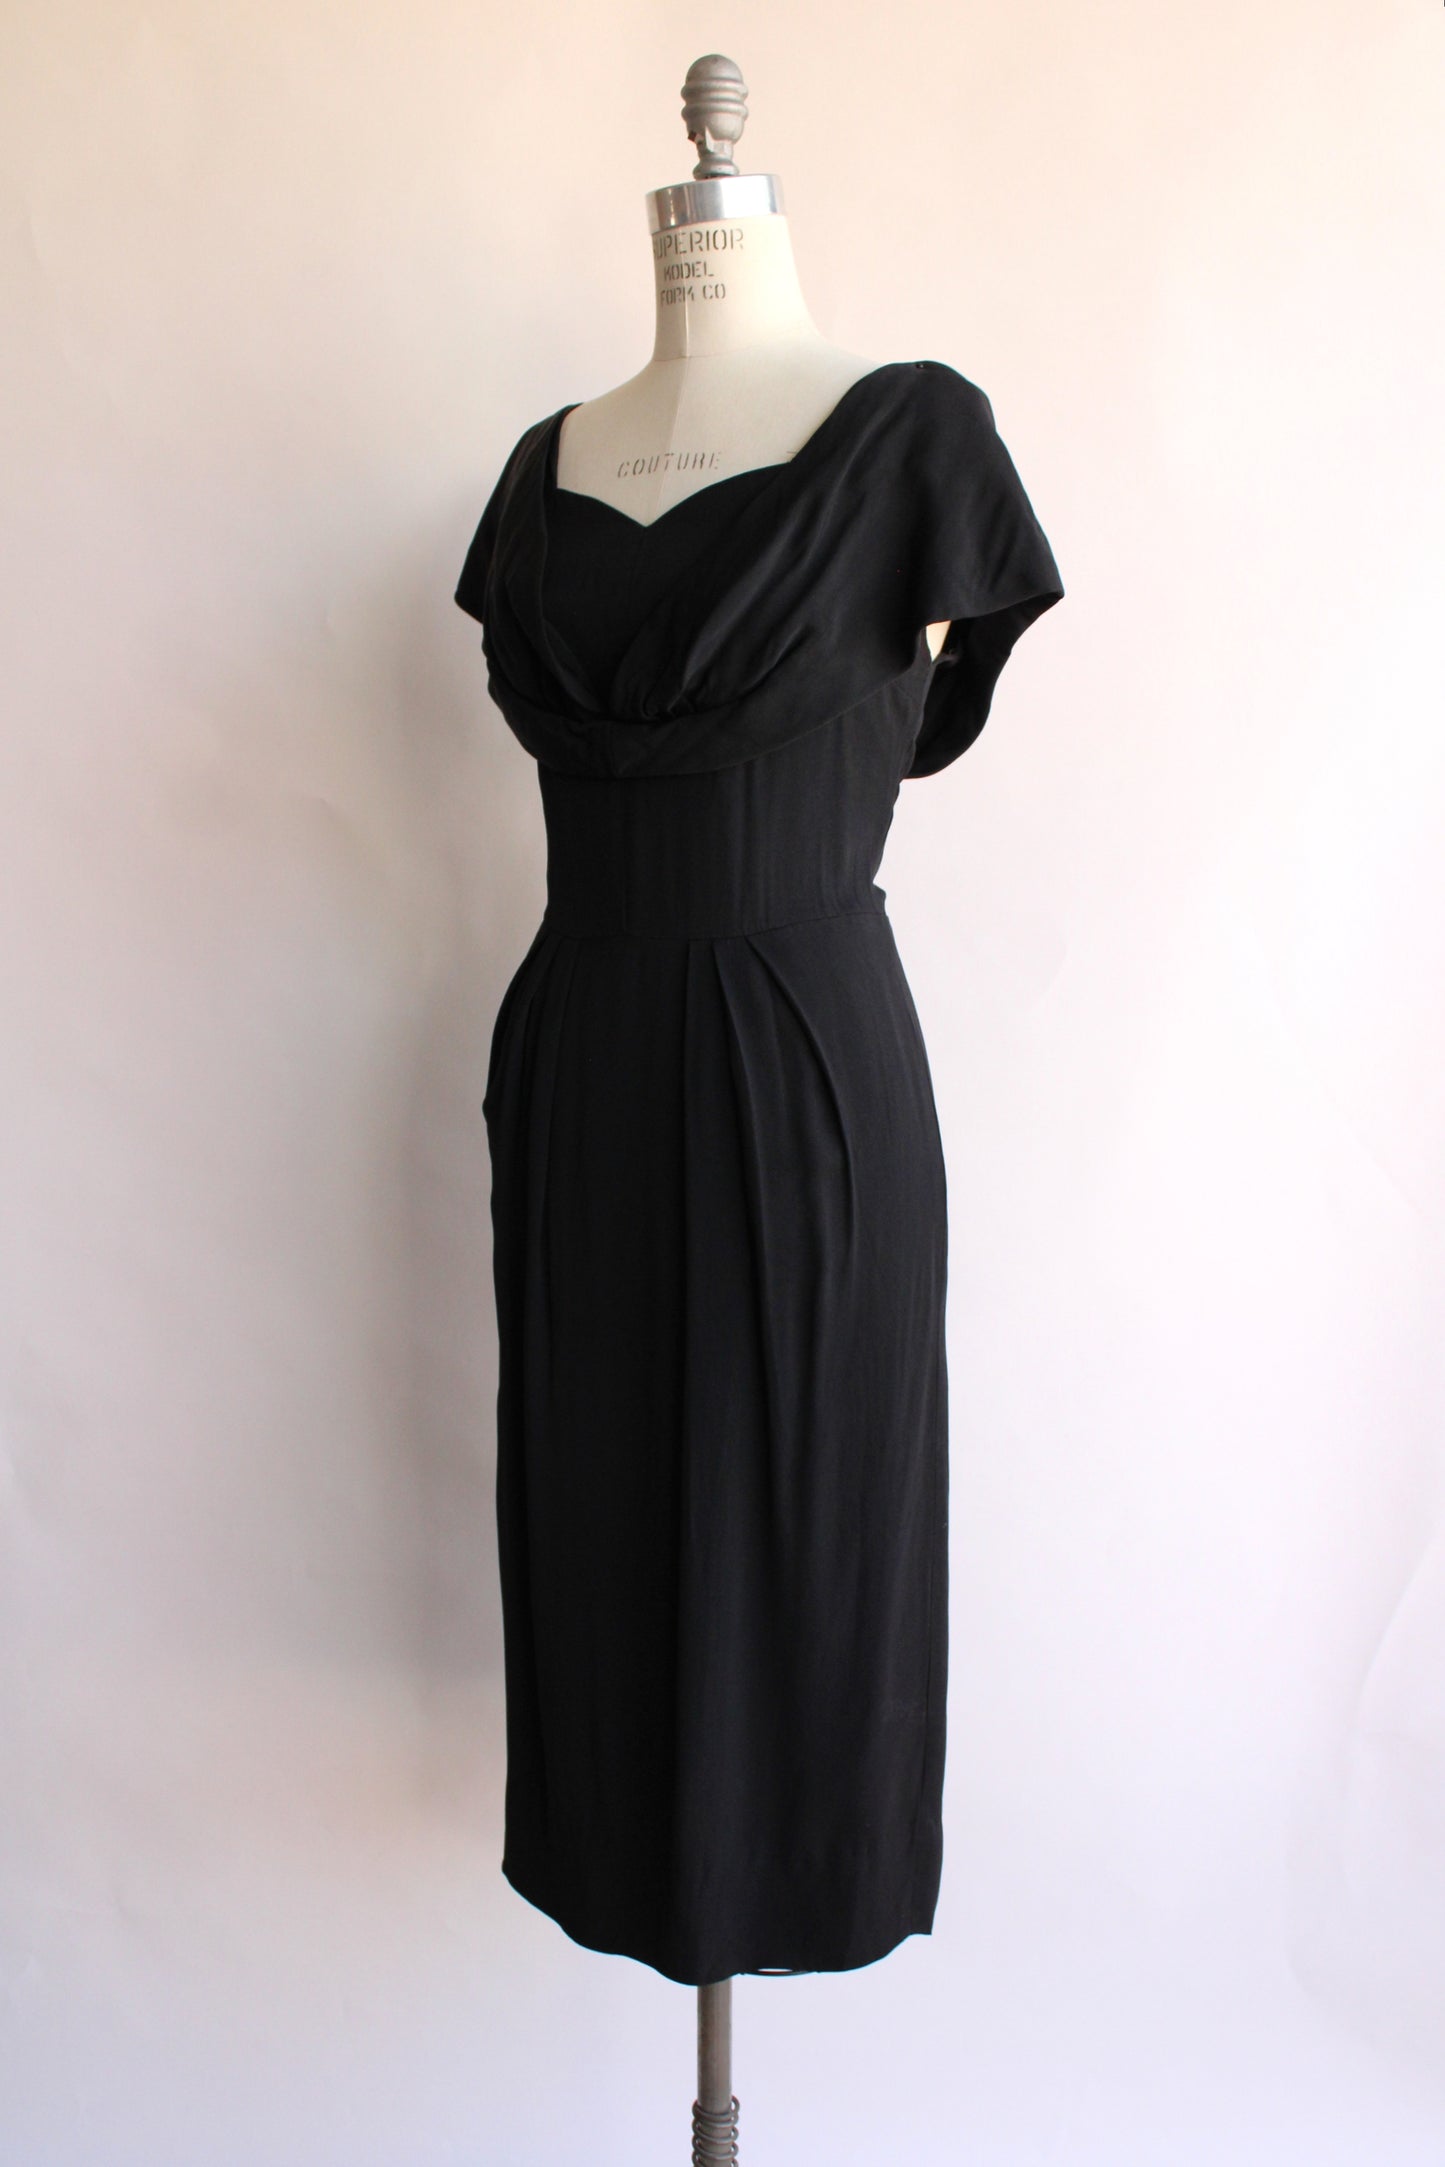 Vintage 1950s Black Rayon Wiggle Dress with Shawl Collar